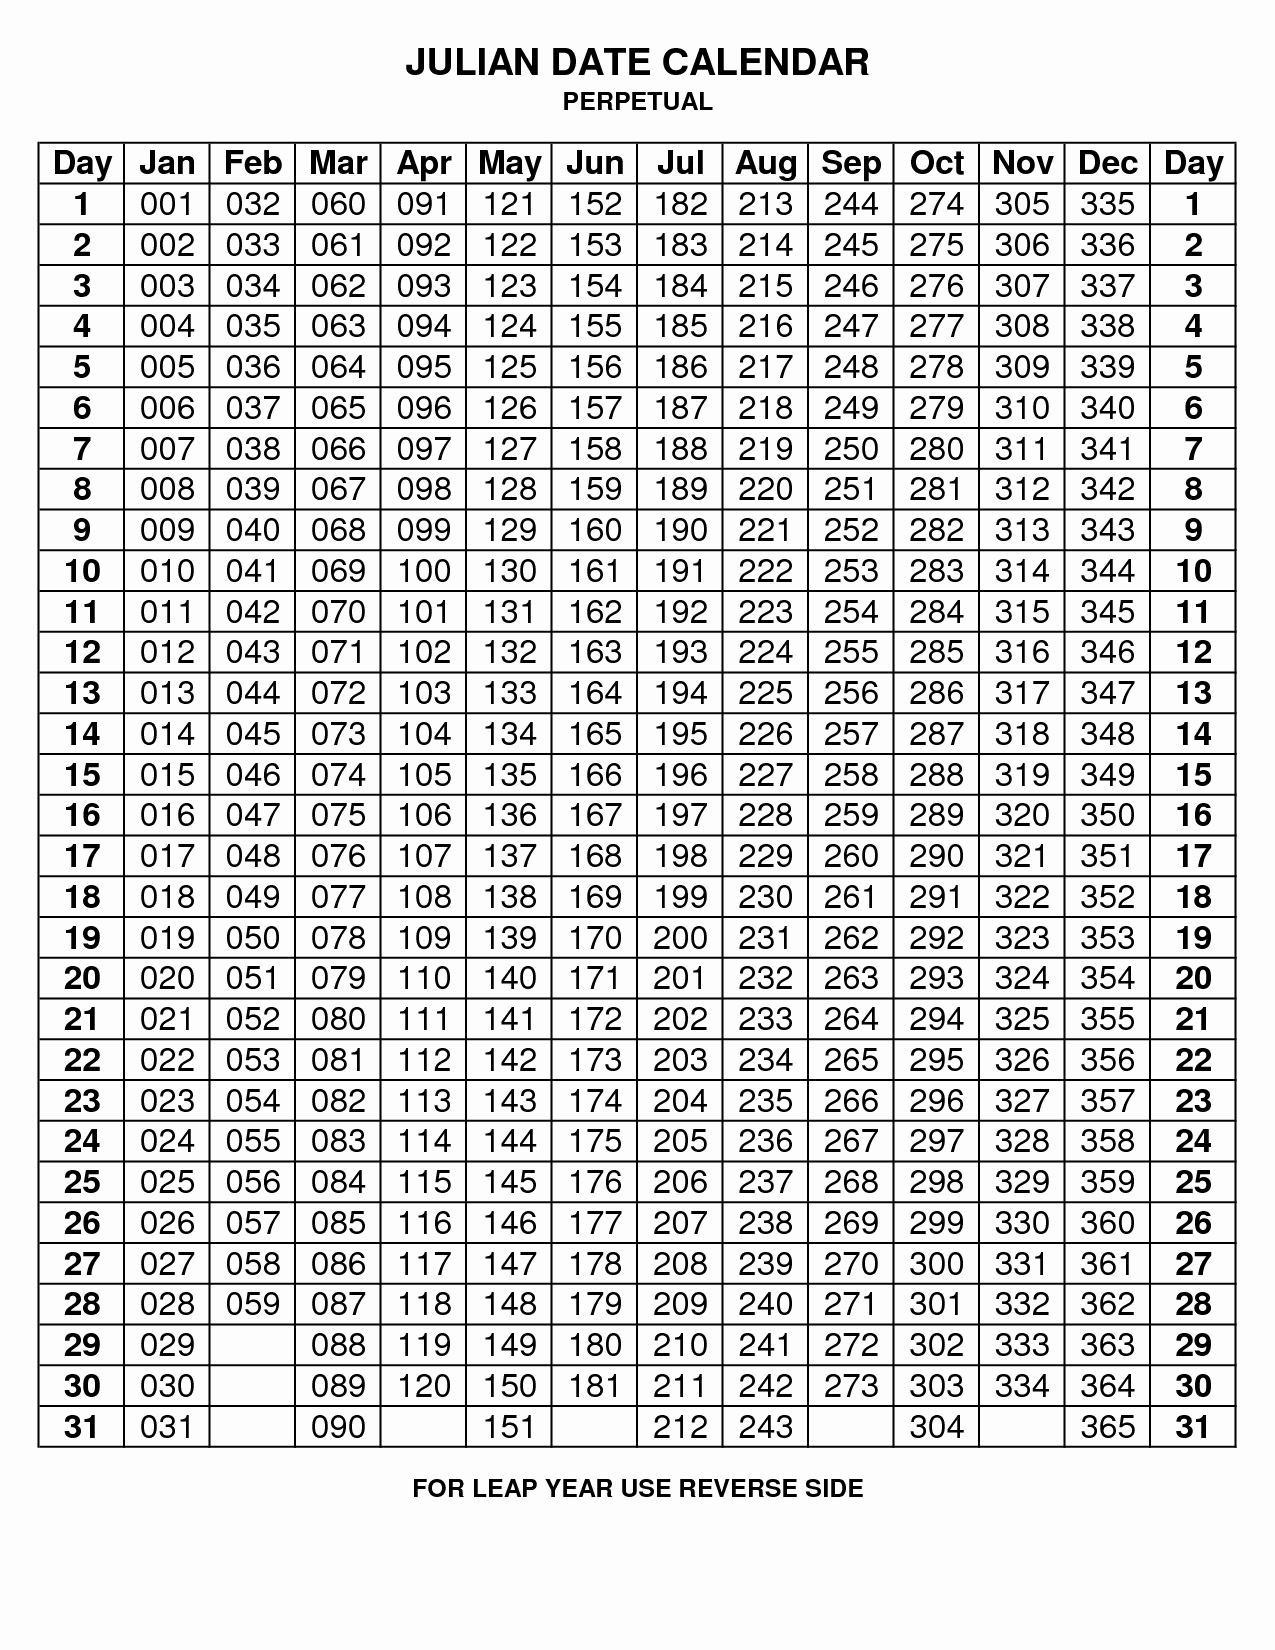 Depo Provera Perpetual Calendar To Print - Calendar Depo Calendar 2021